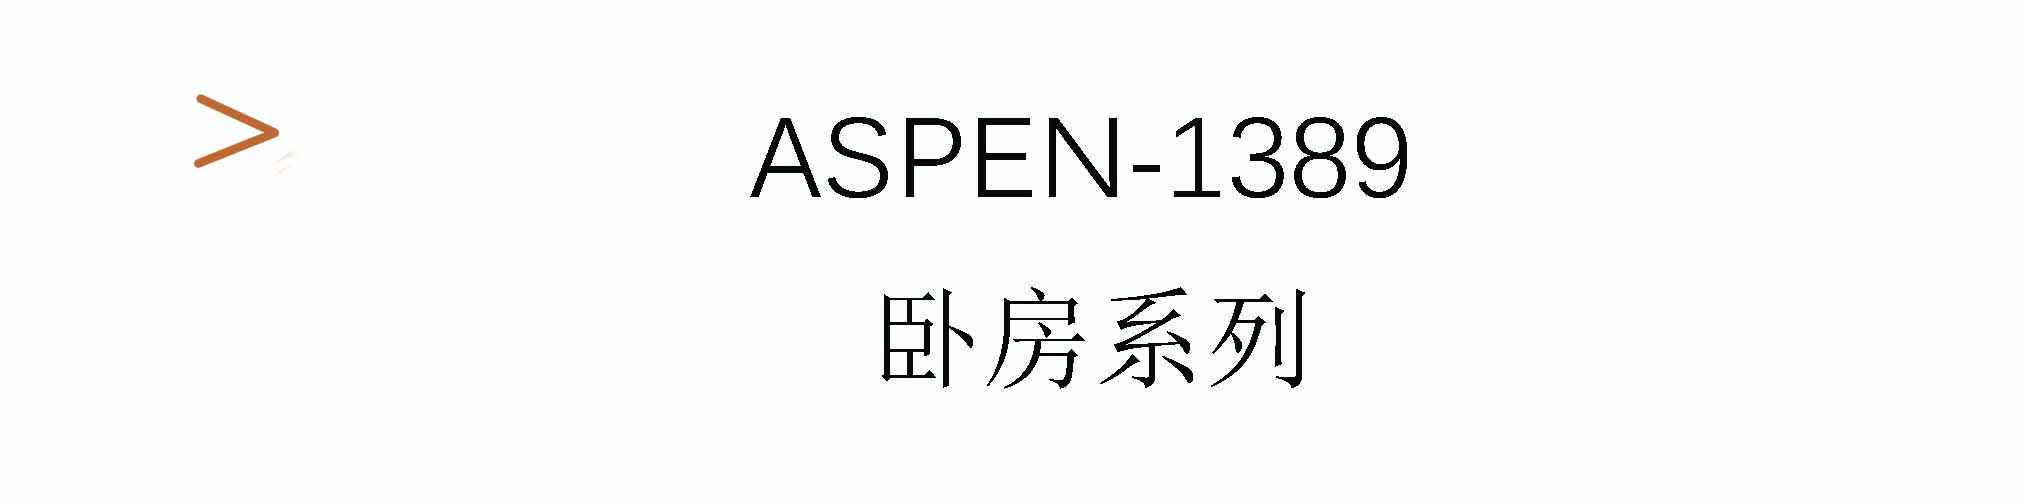 Aspen-1389